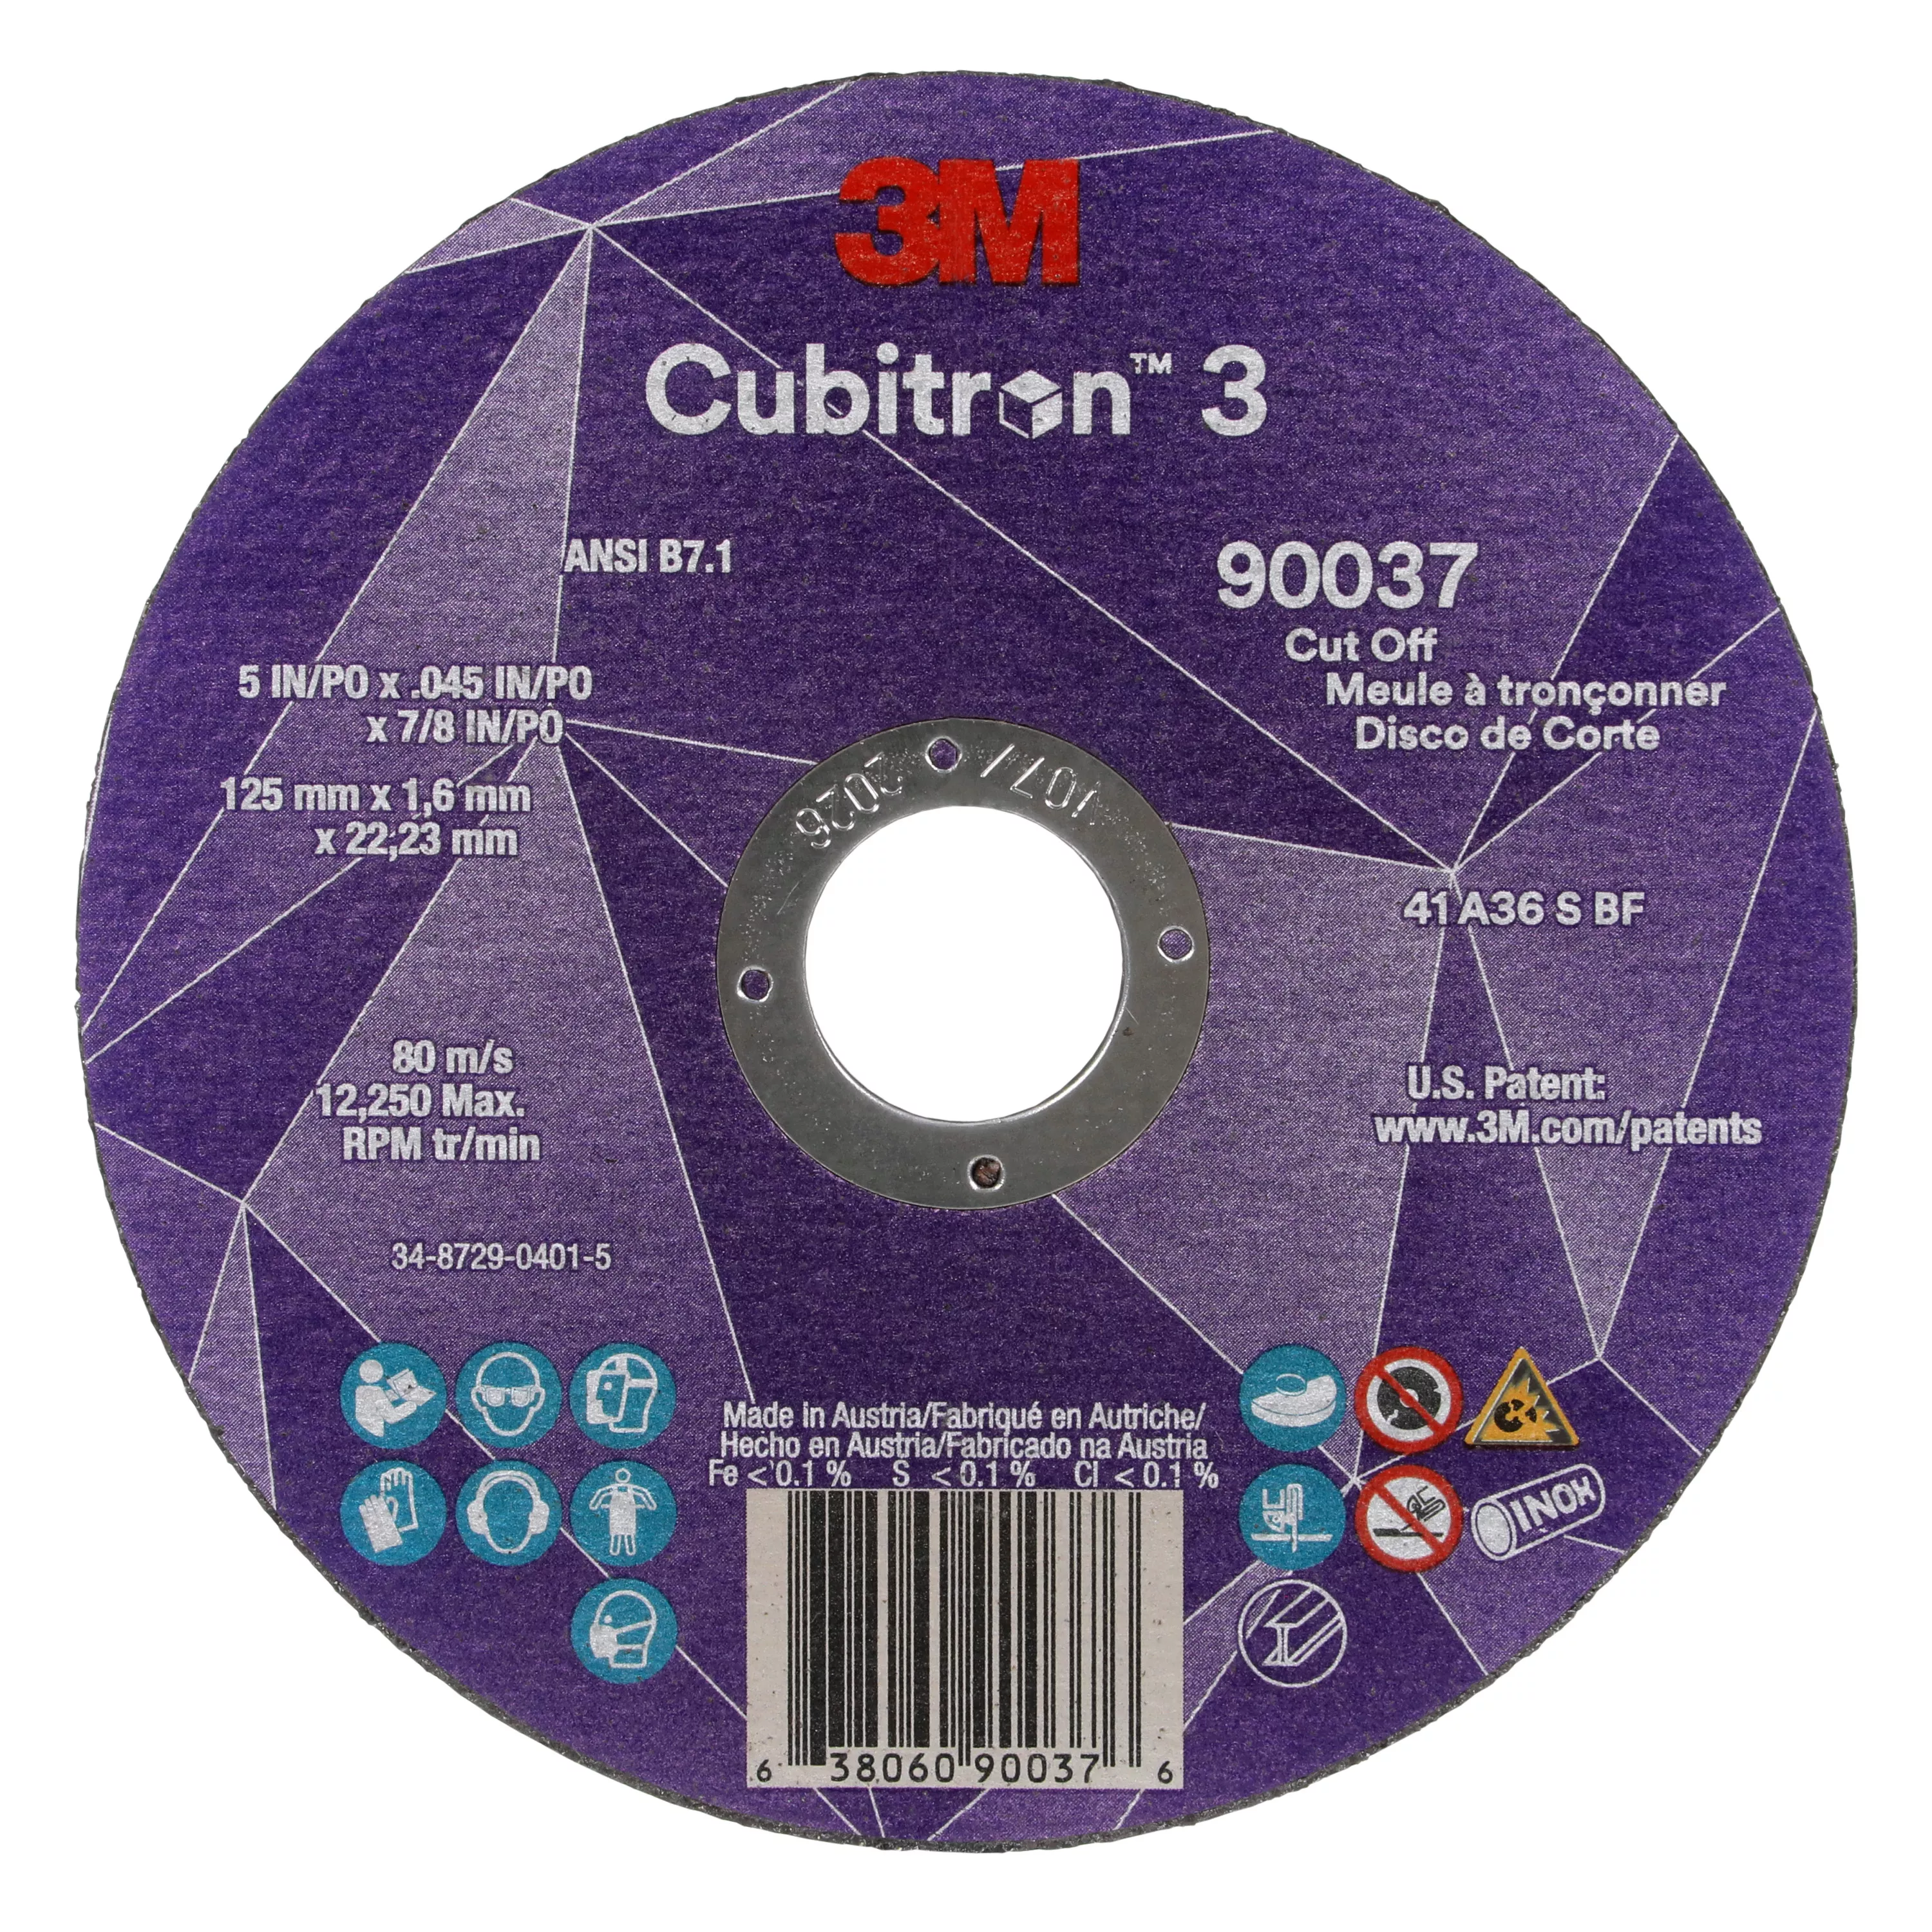 SKU 7100304007 | 3M™ Cubitron™ 3 Cut-Off Wheel